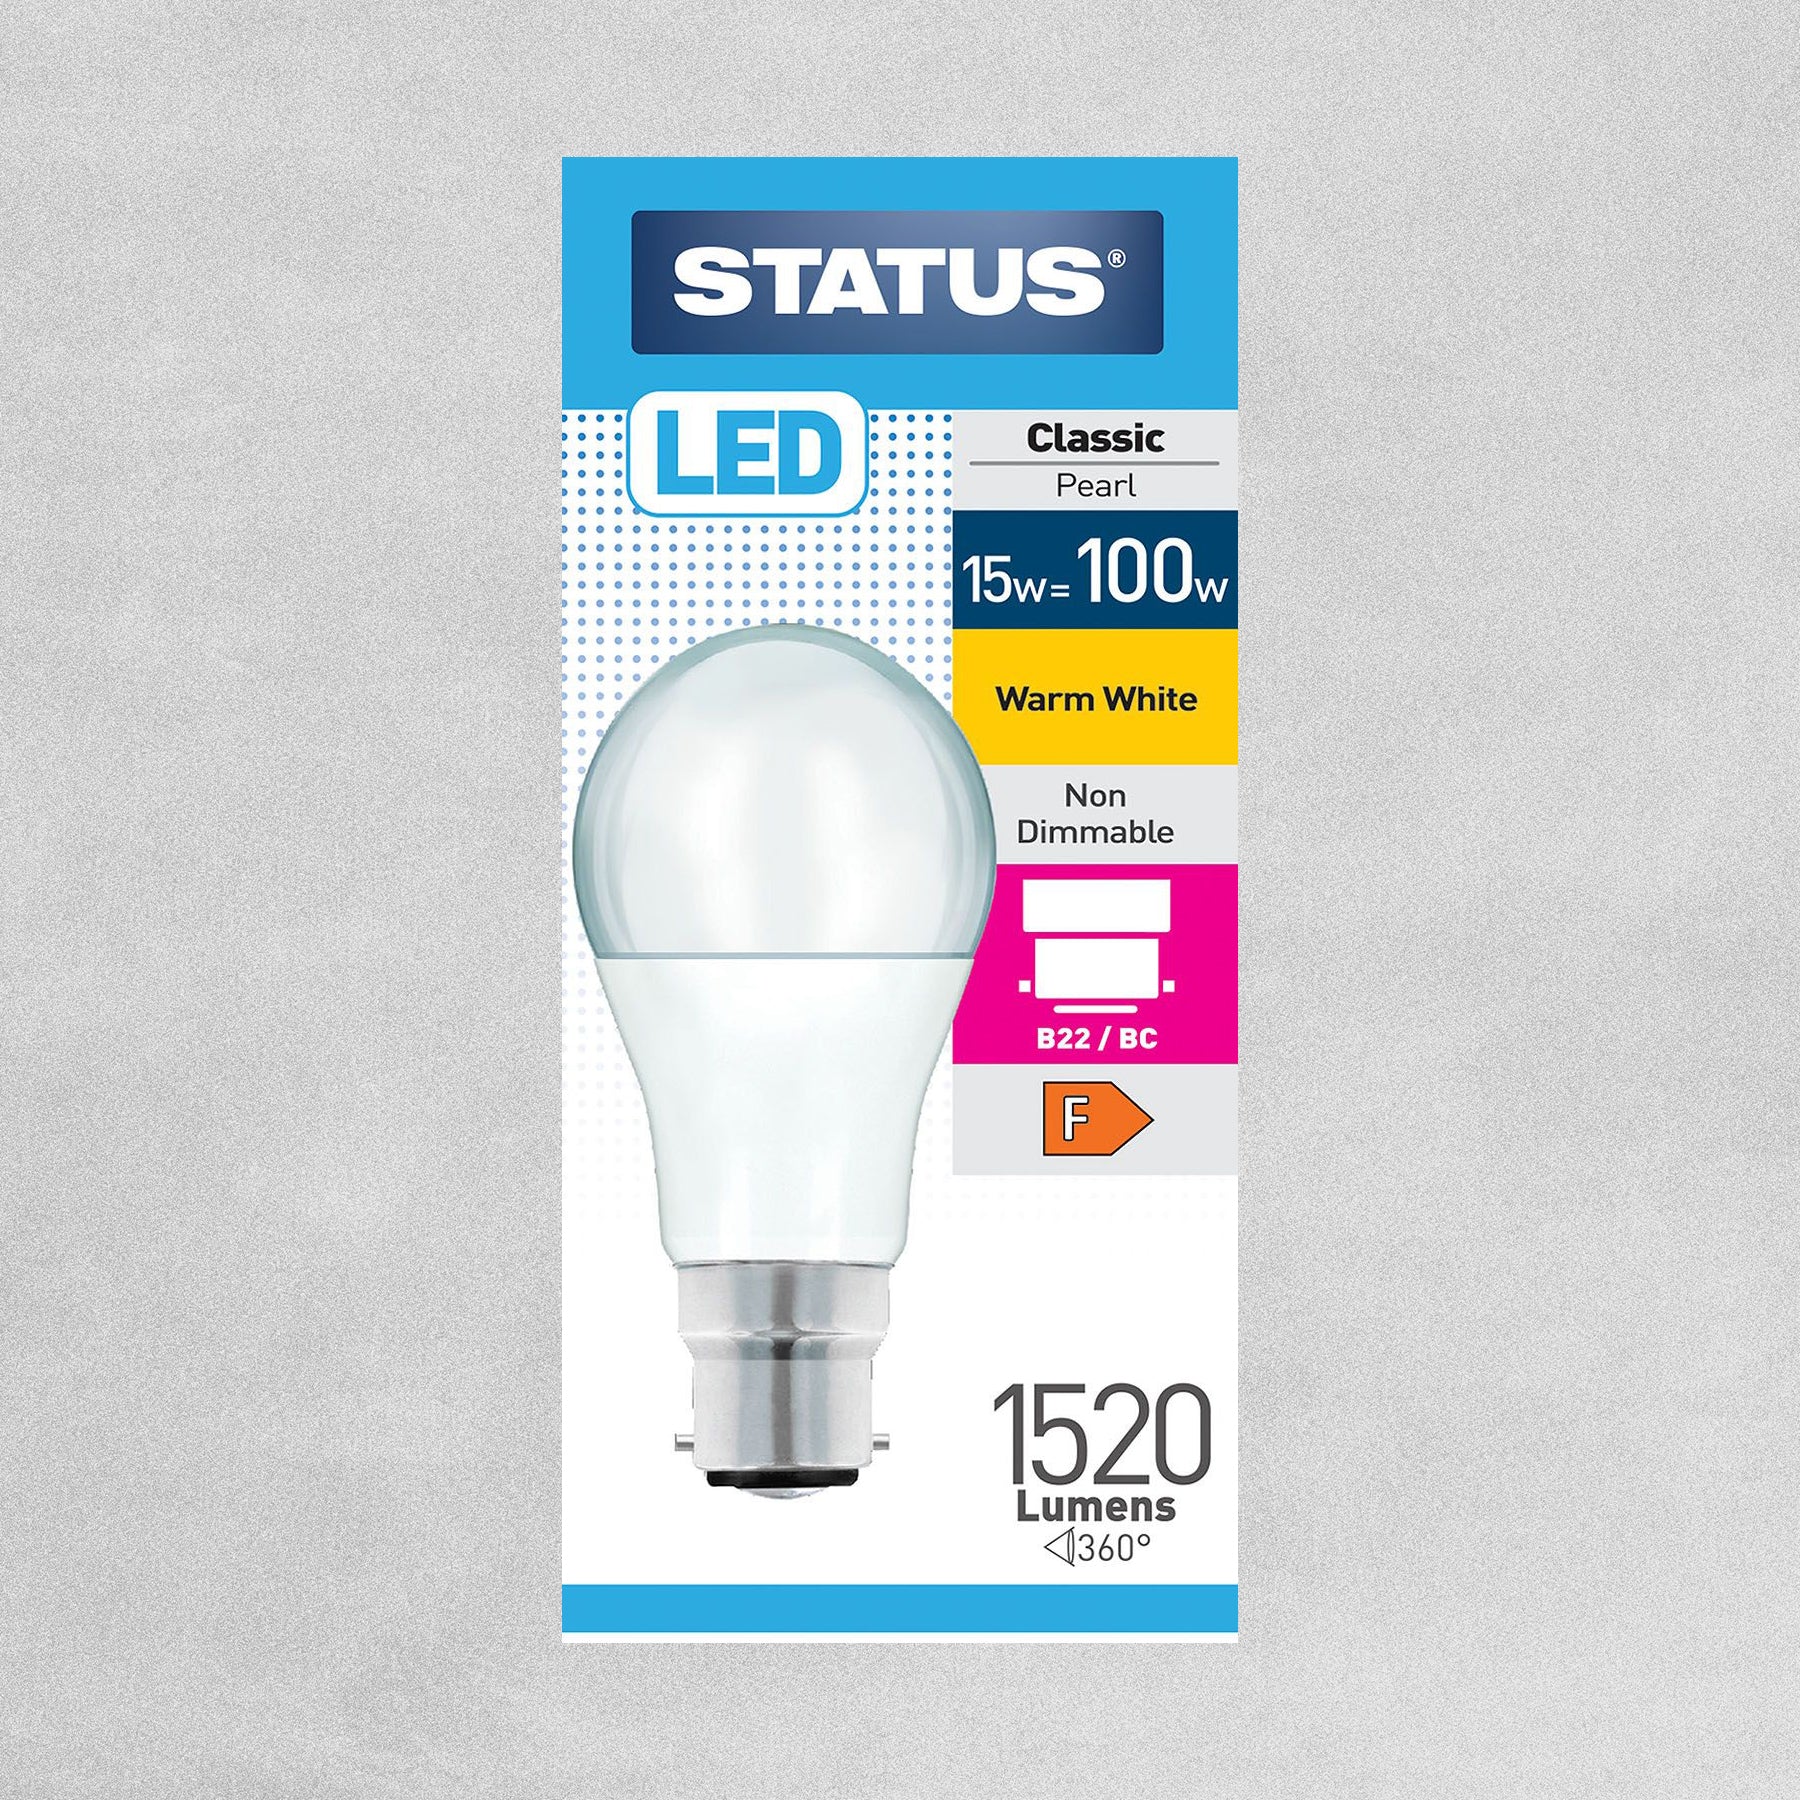 Status LED Classic Pearl Bulb B22/BC 15w=100w - Warm White